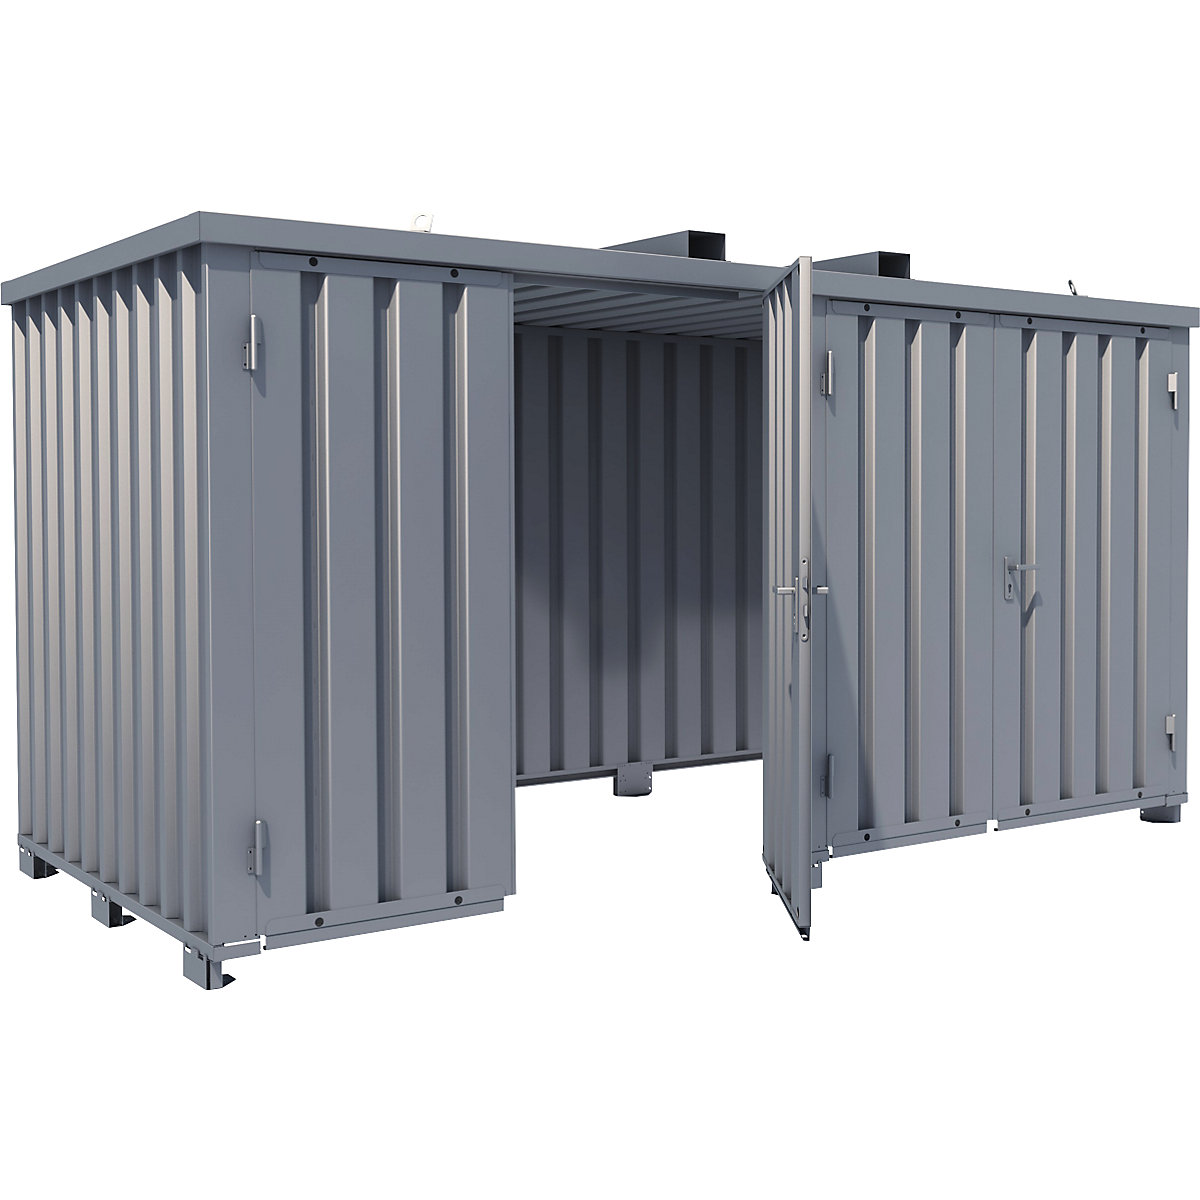 Gasflessencontainer, zonder vloer, uitwendige b x d = 2100 x 4100 mm-2